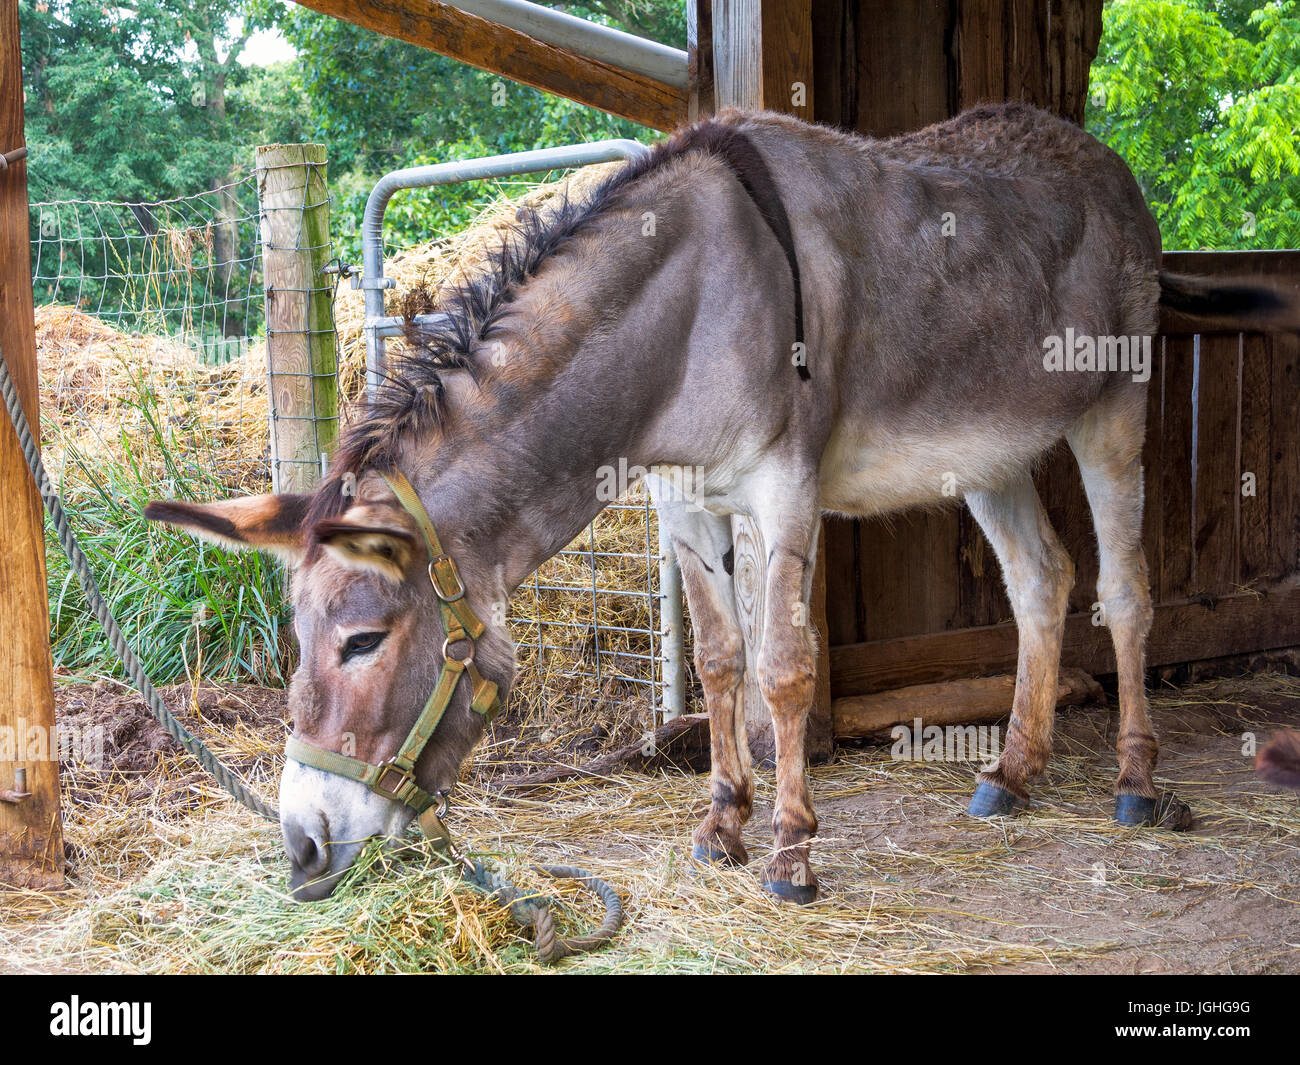 Donkey grazing on hay in open barn Stock Photo